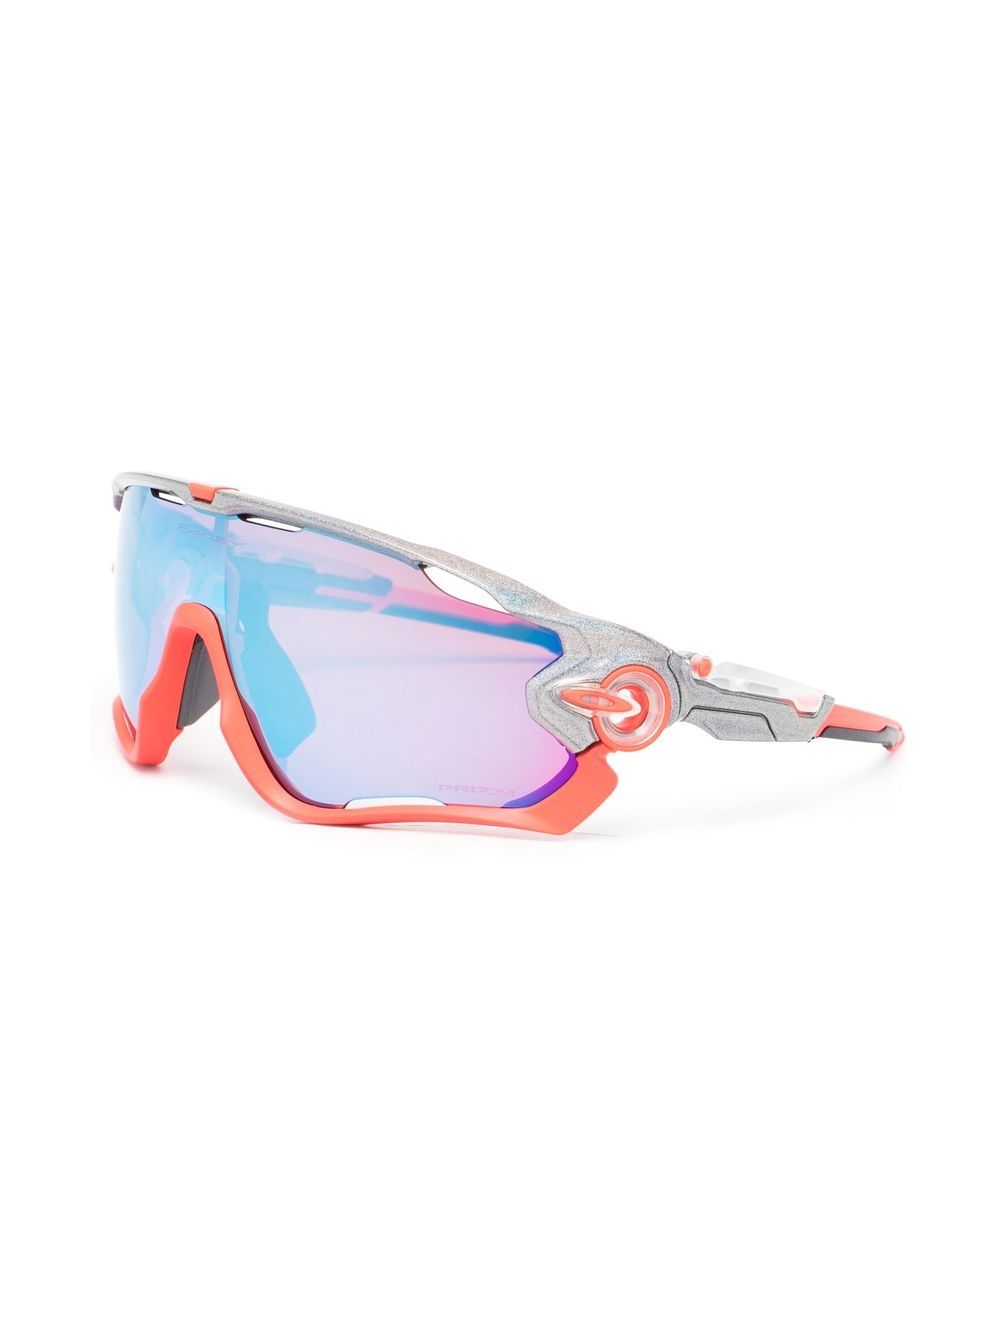 Jawbreaker curved sunglasses